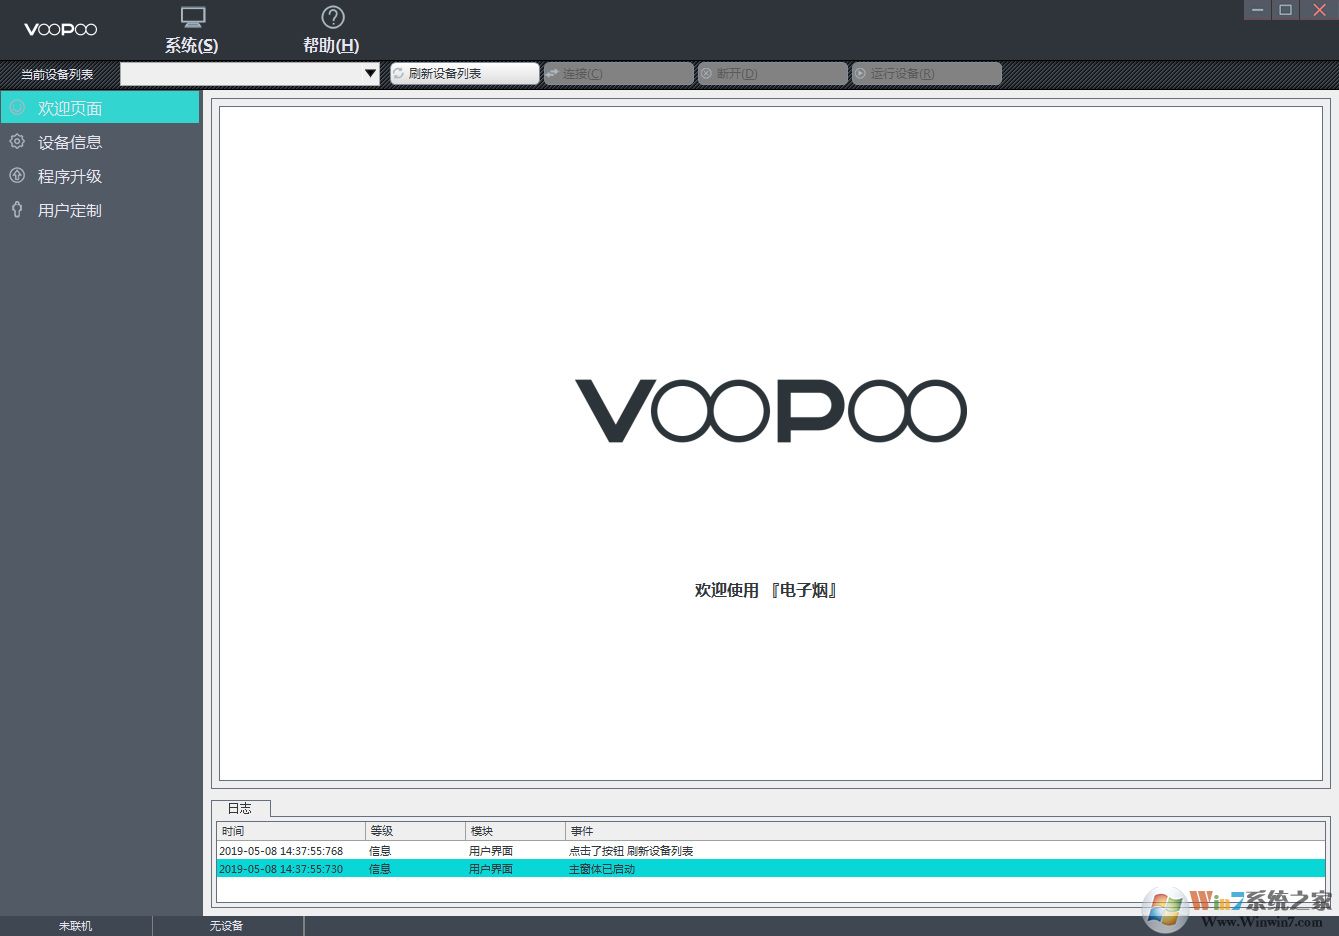 VooPoo电子烟配置工具客户端 V1.5.1.31 最新版